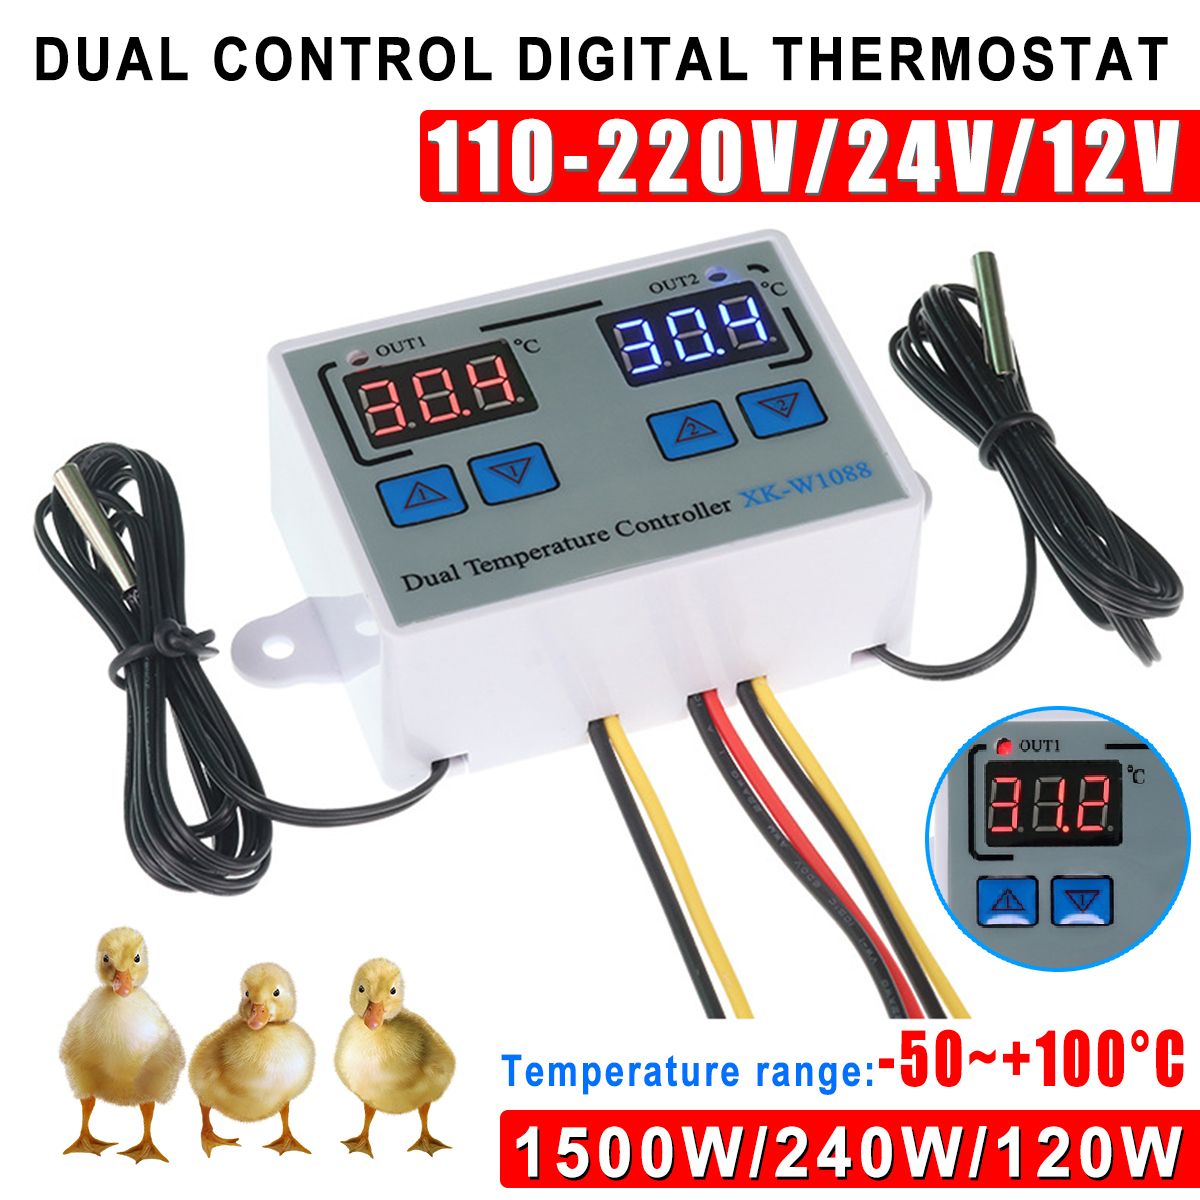 XK-W1088-Digital-Thermostat-High-Precision-Dual-Control-Adjustable-Temperature-Switch-Microcomputer--1616991